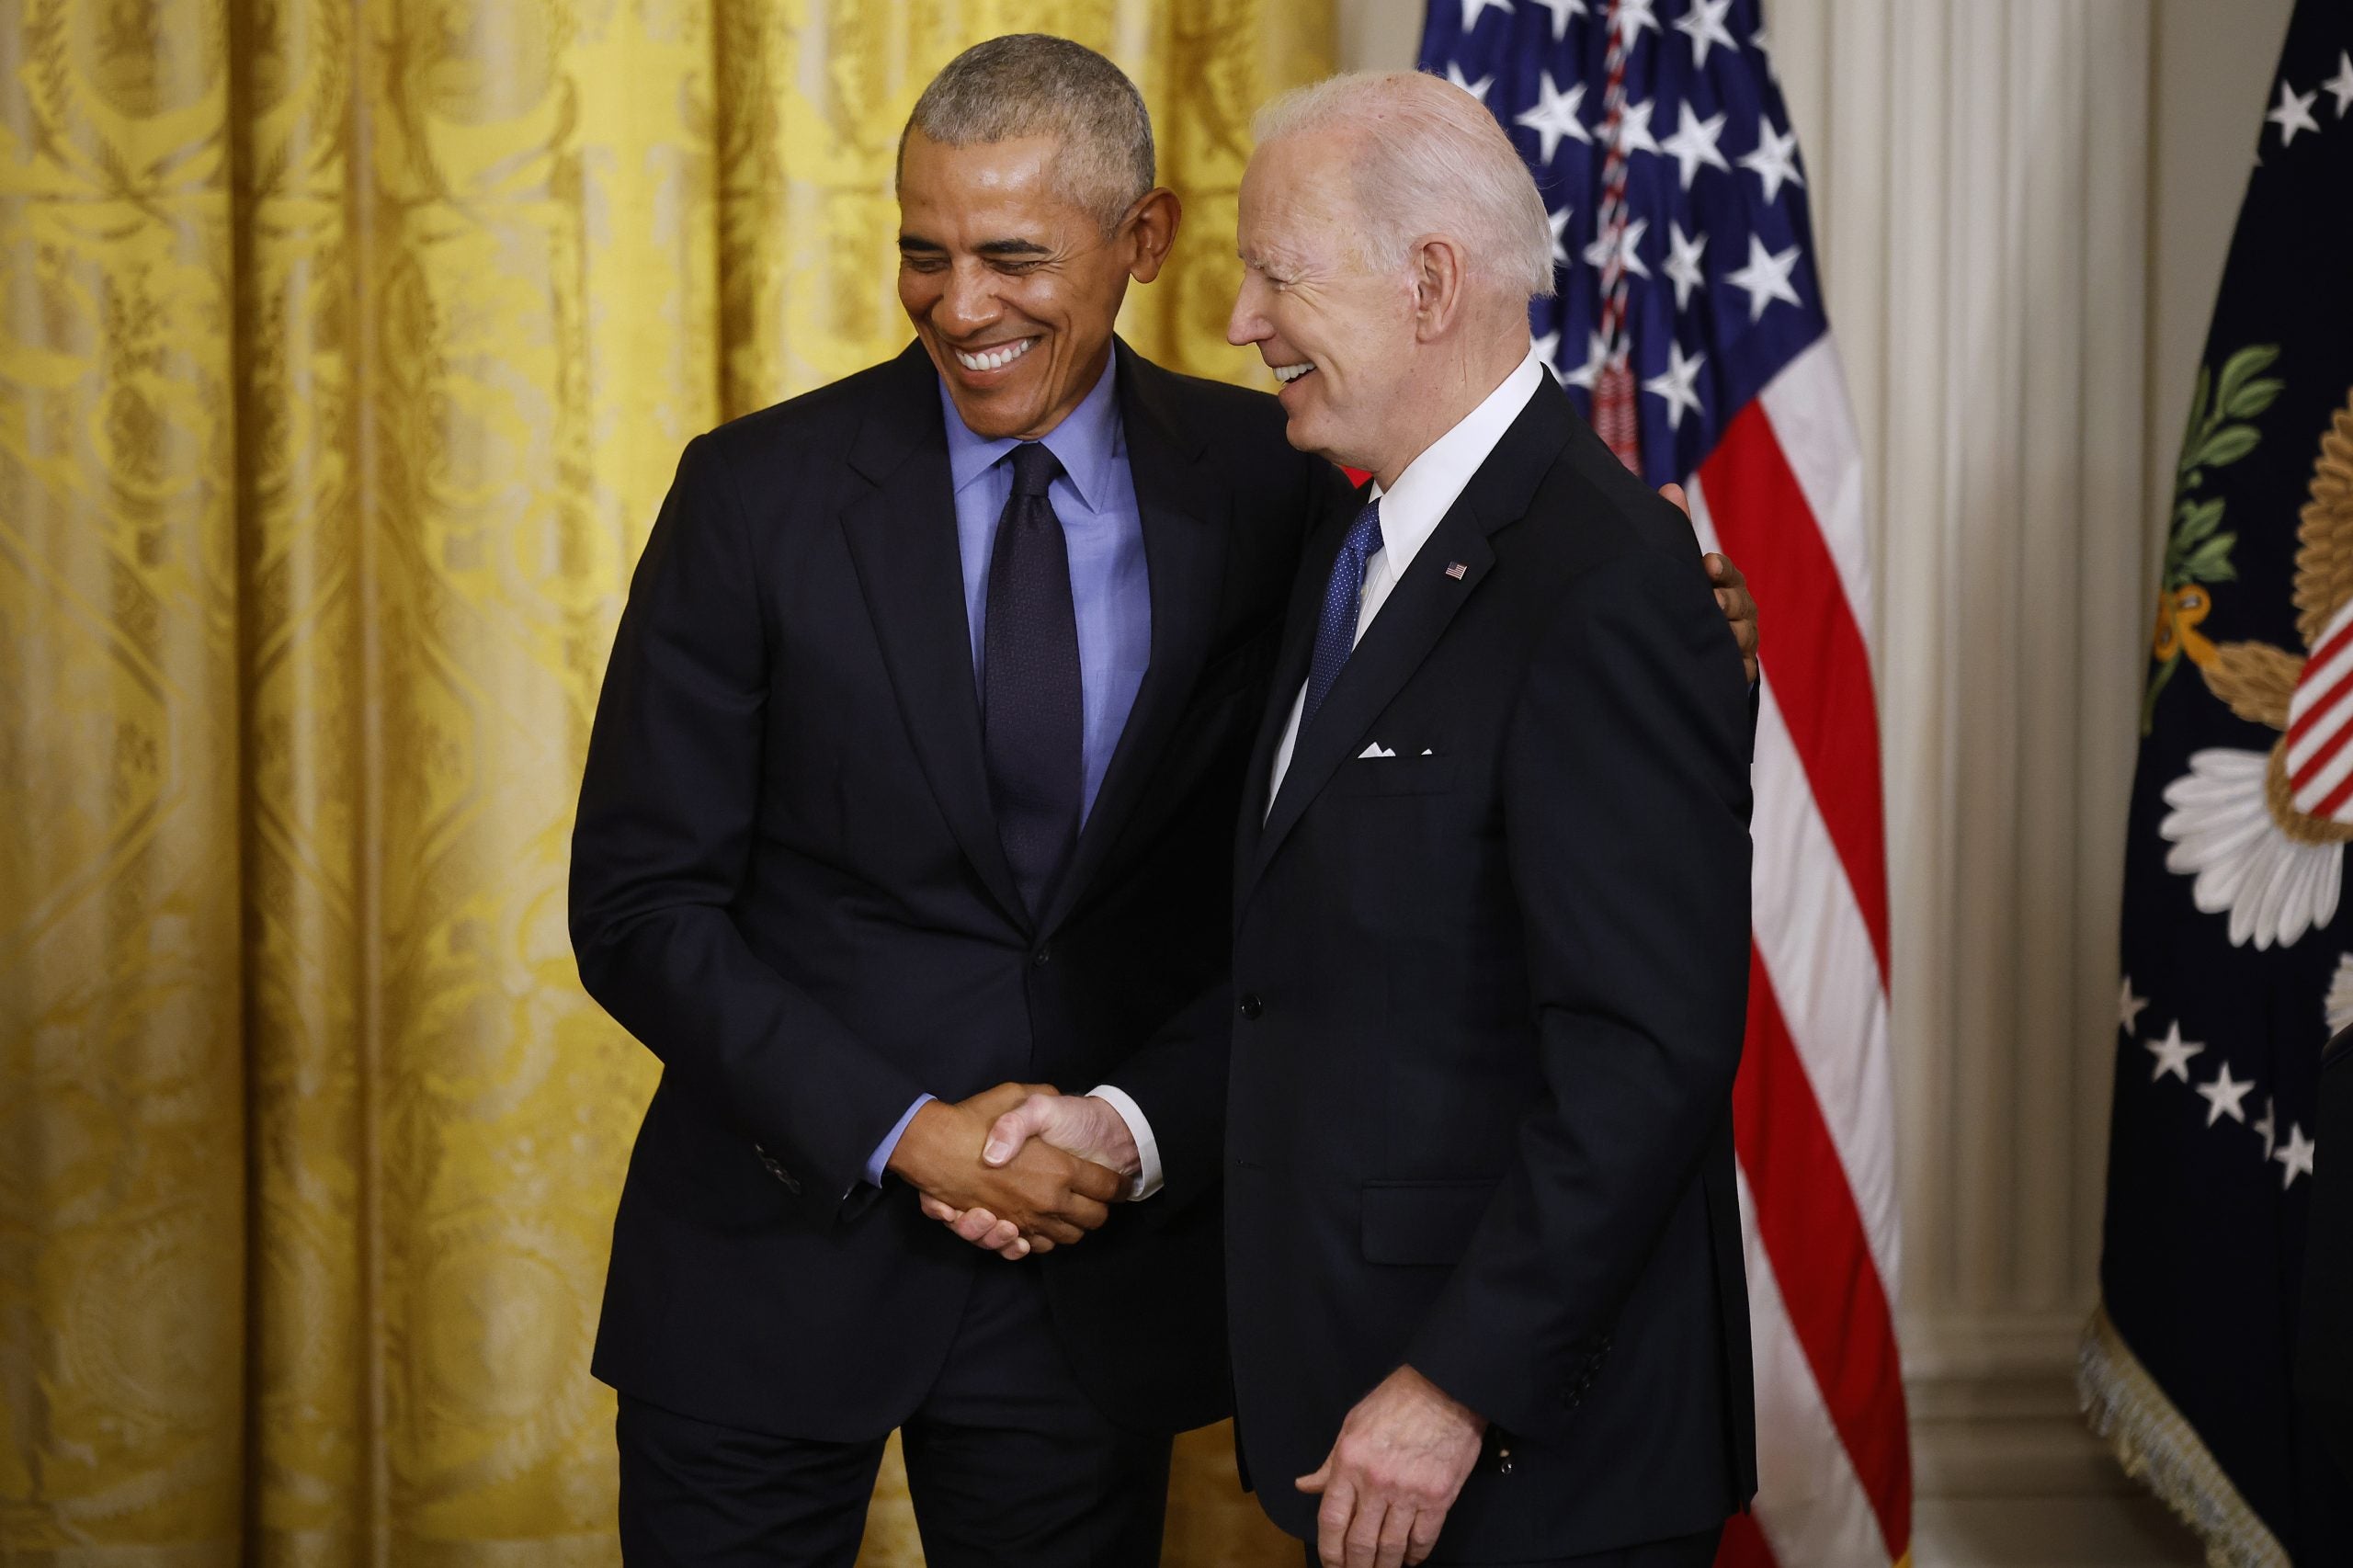 Obama Returns To White House, Biden Fixes ObamaCare 'Glitch'